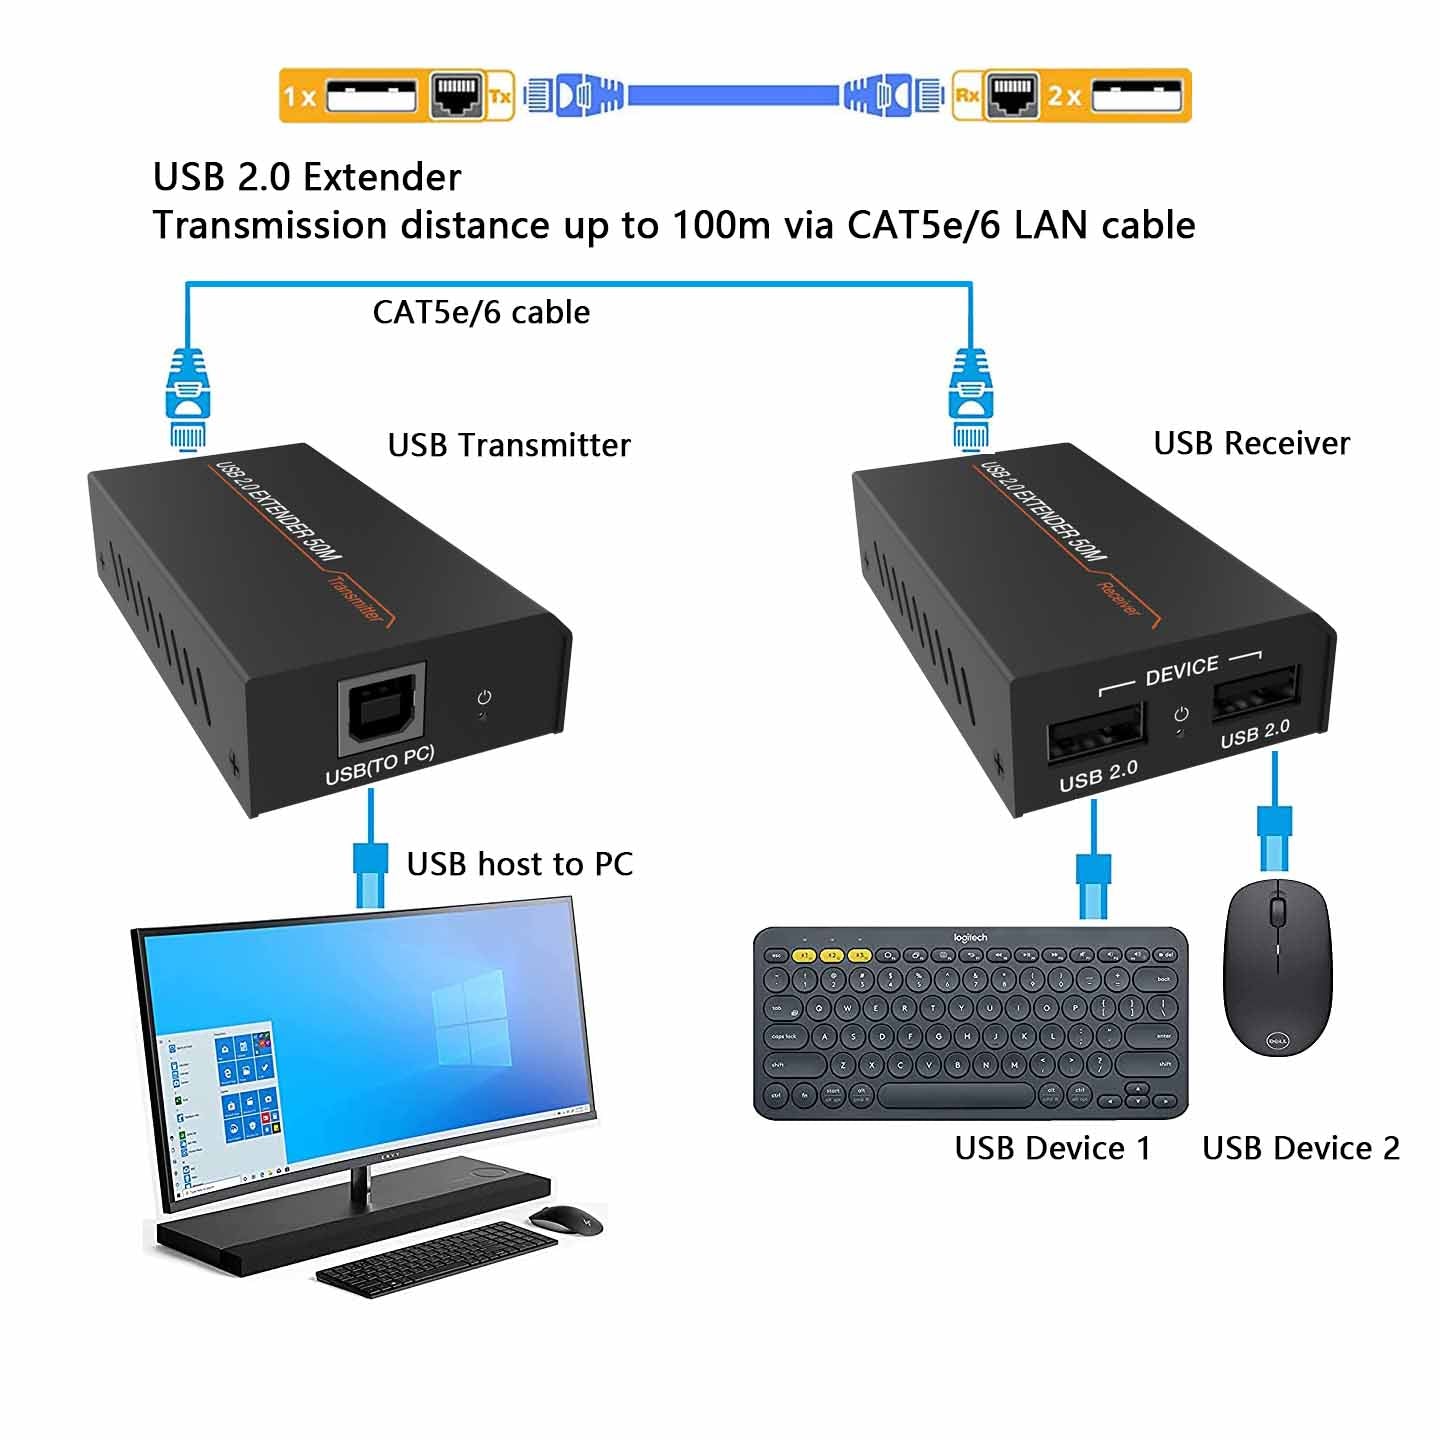 USB 2.0 Extender via CAT5e/6 LAN cable 100m transmission function